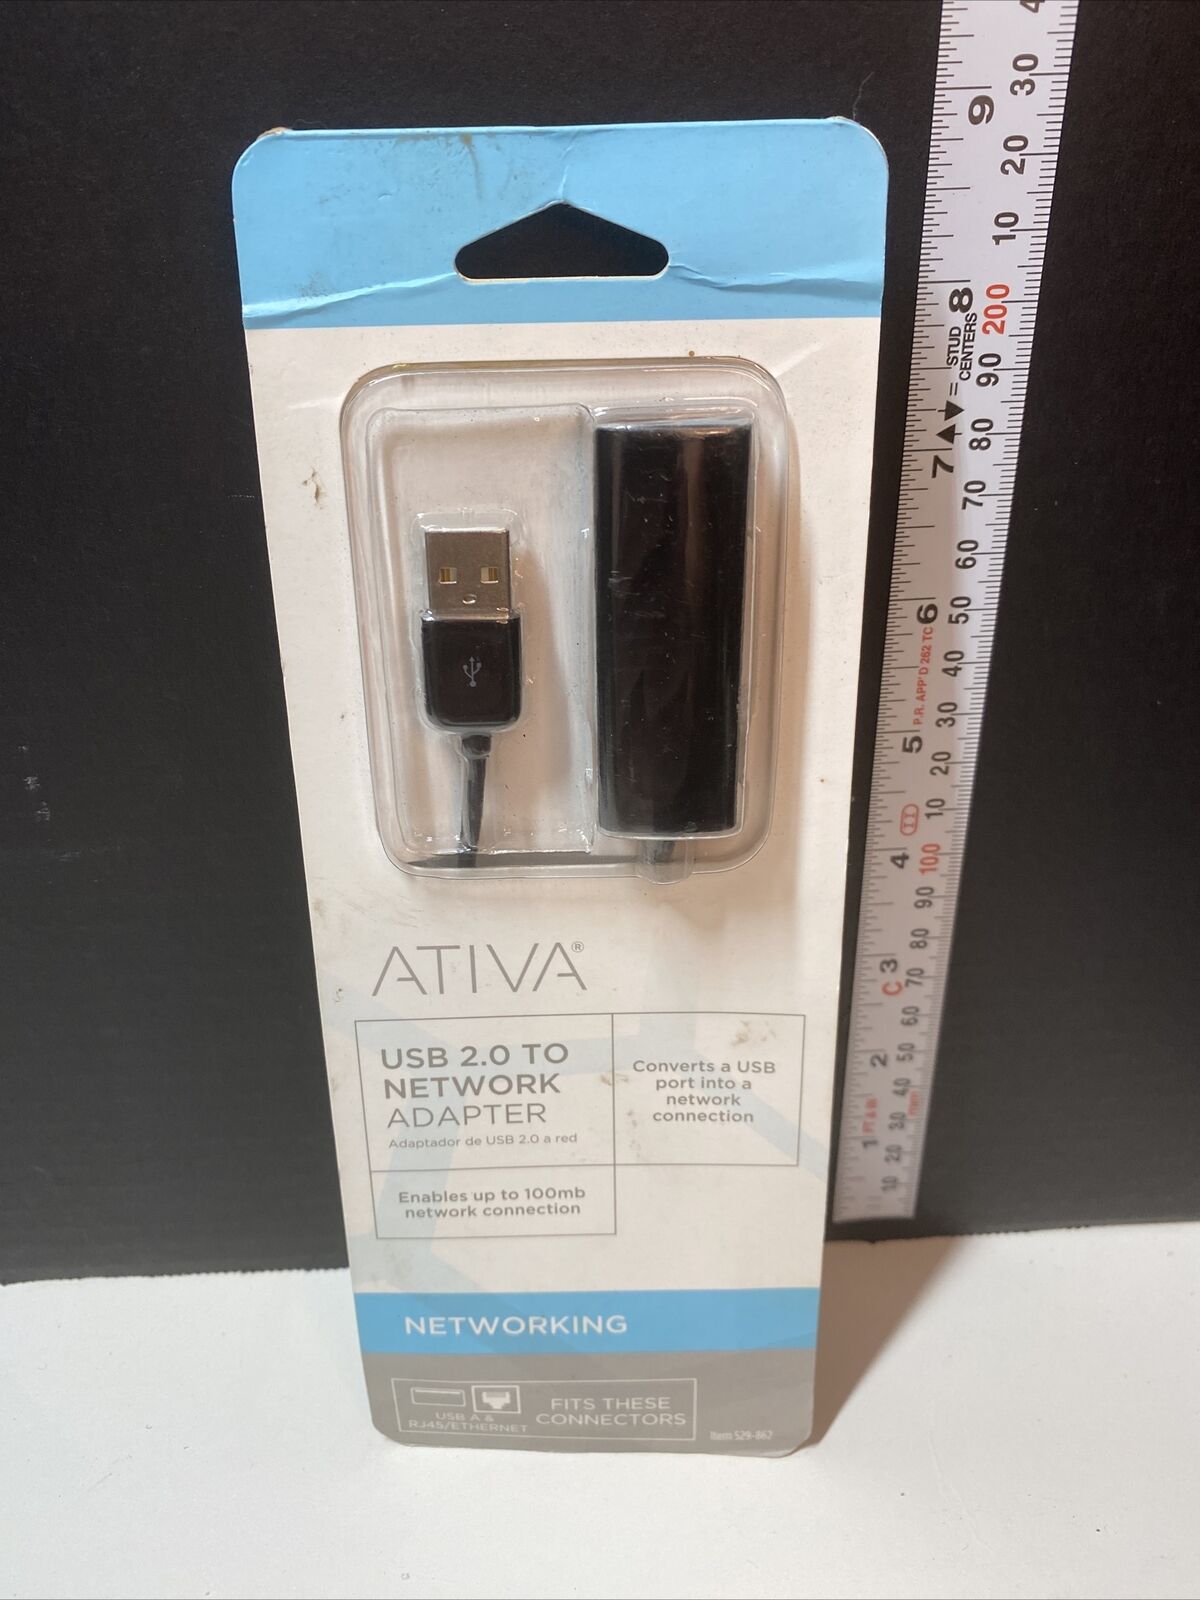 ATIVA USB 2.0 TO NETWOK ADAPTE 735854009861